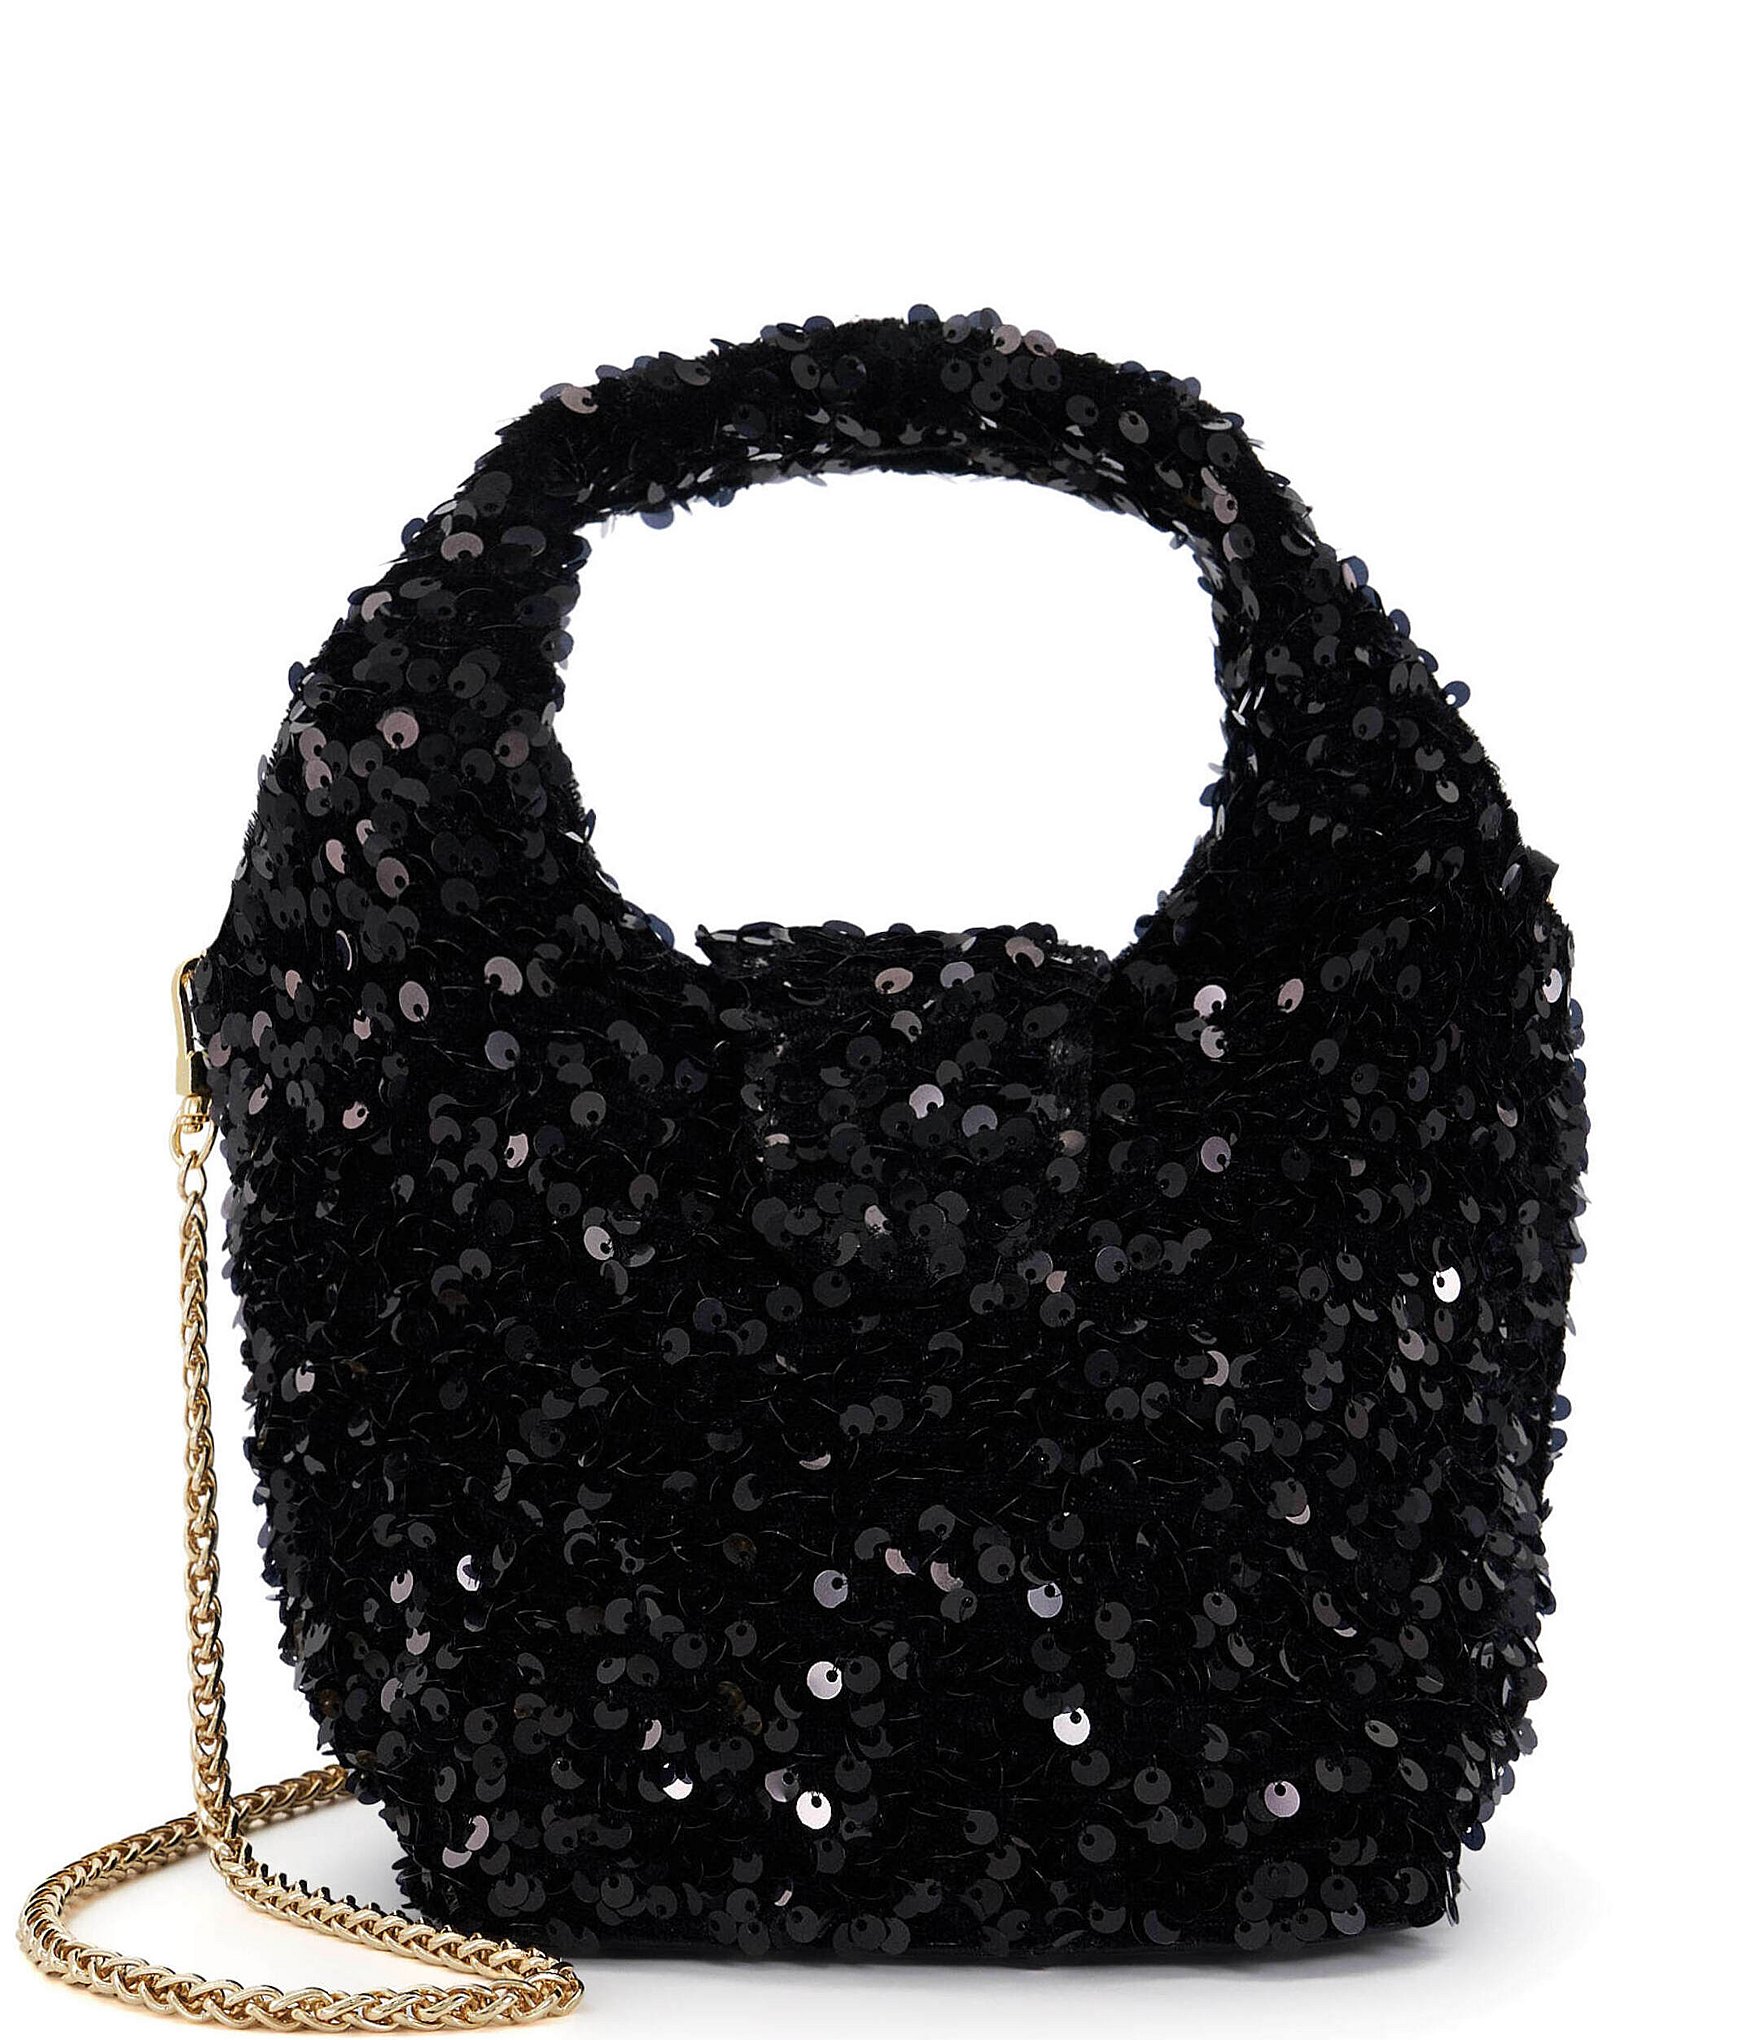 JW Anderson Mini Sequin Shopper Tote Bag, Black, Women's, Handbags & Purses Tote Bags & Totes